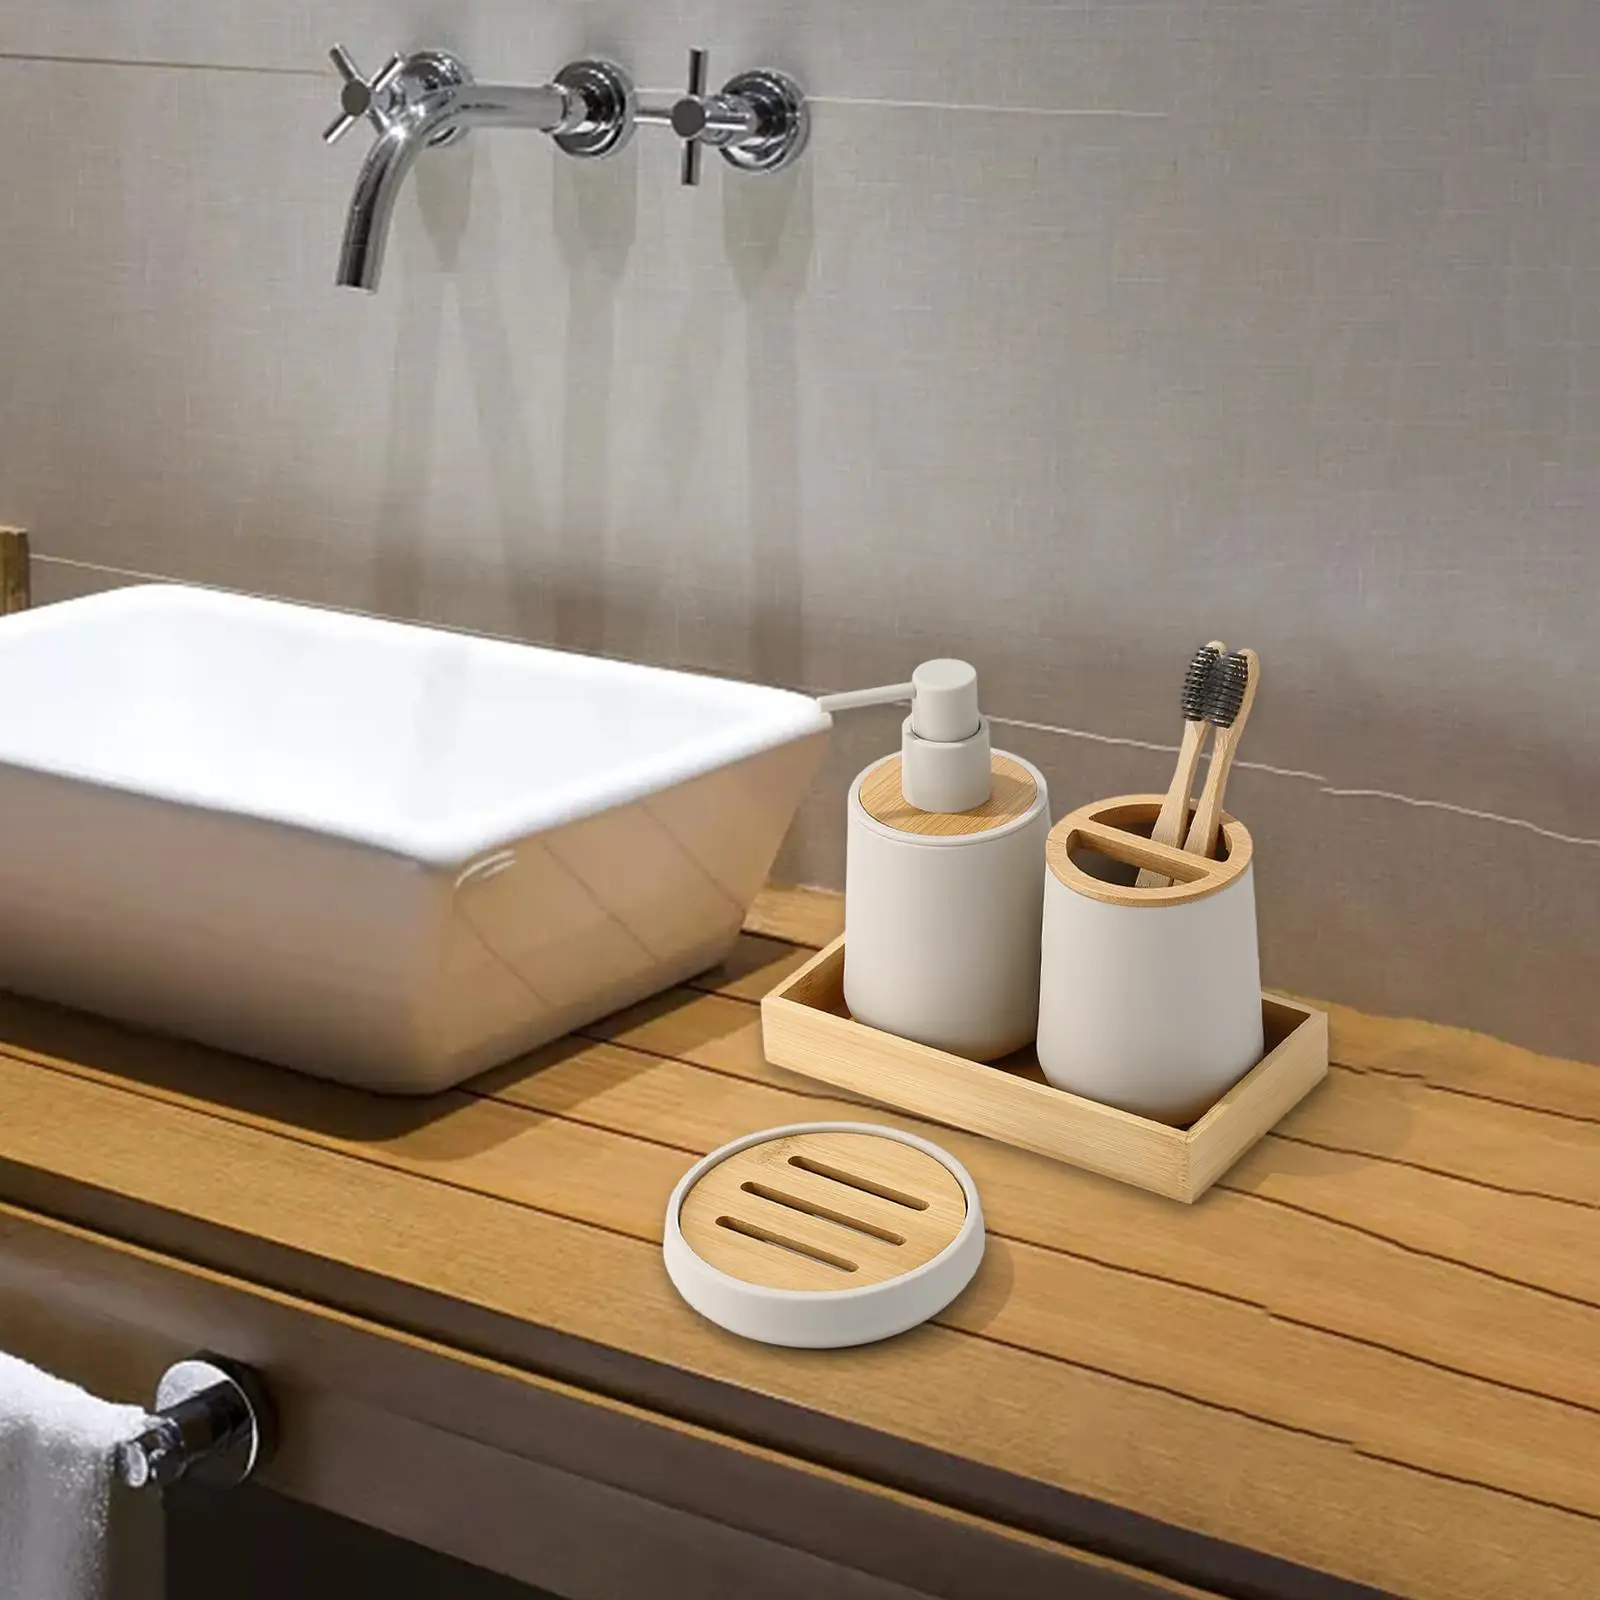 4 Pieces Bathroom Accessories Set Collection for Homes, Hotels Complete Set Countertop Decoration Bath Set Stylish Design